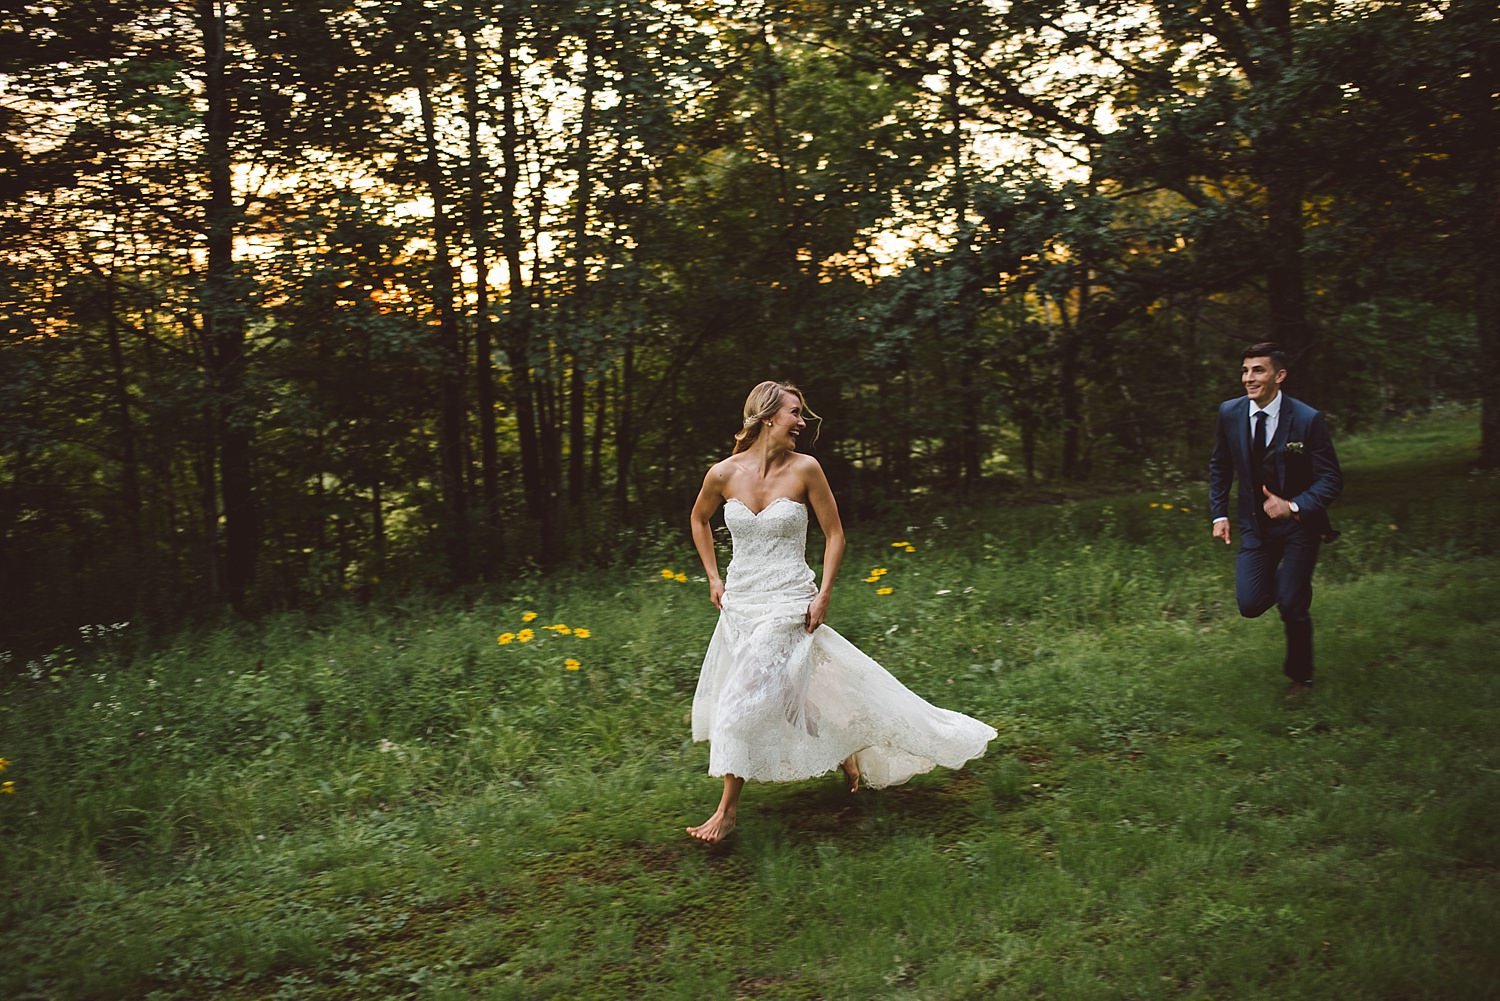 Undressed-Moments-New-Hampshire-Wedding-140-1.jpg